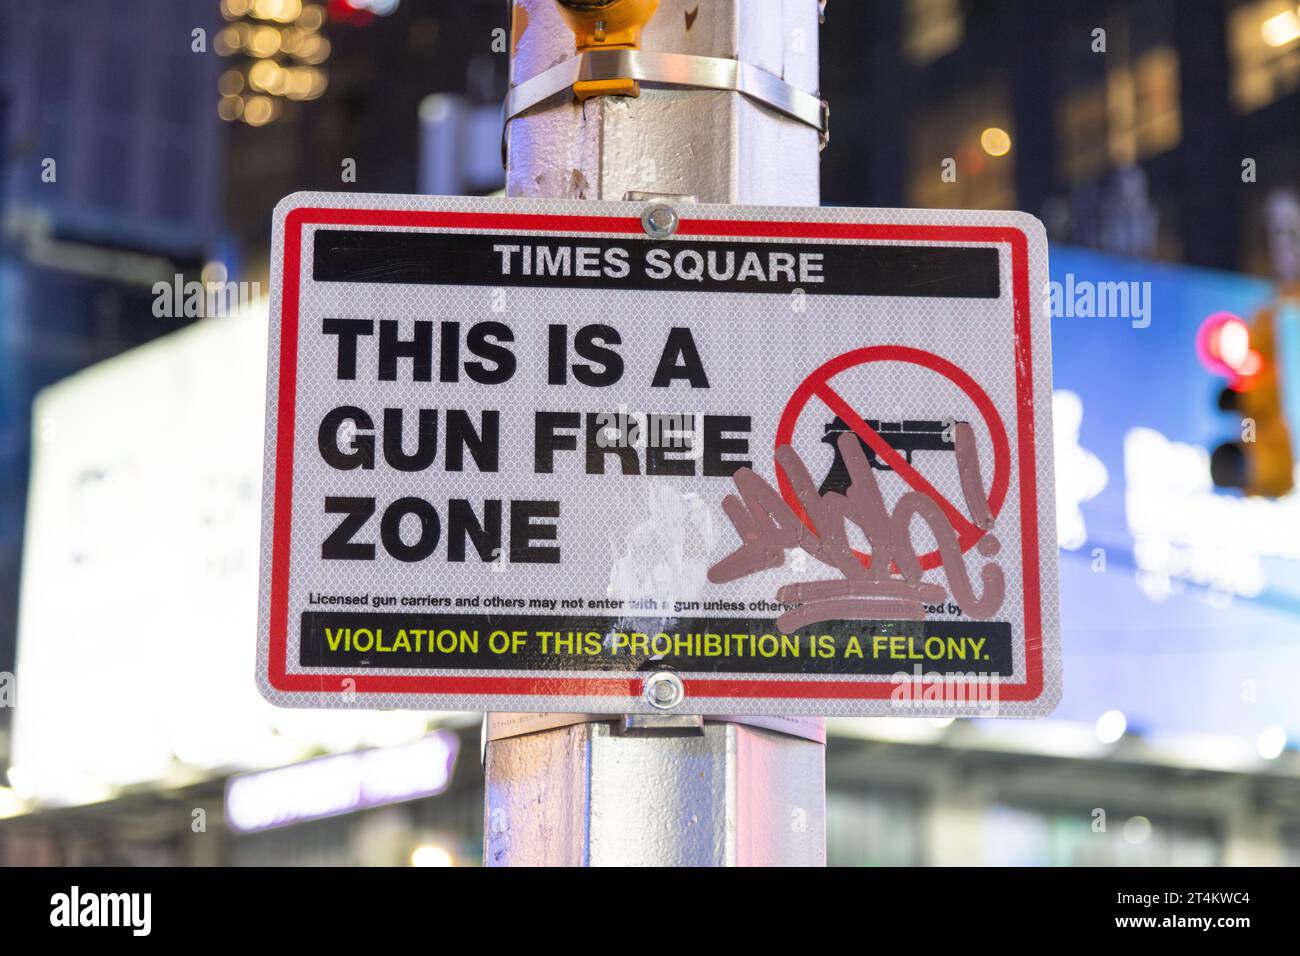 Gun free zone sign, Times Square, New York, United States of America. Stock Photo